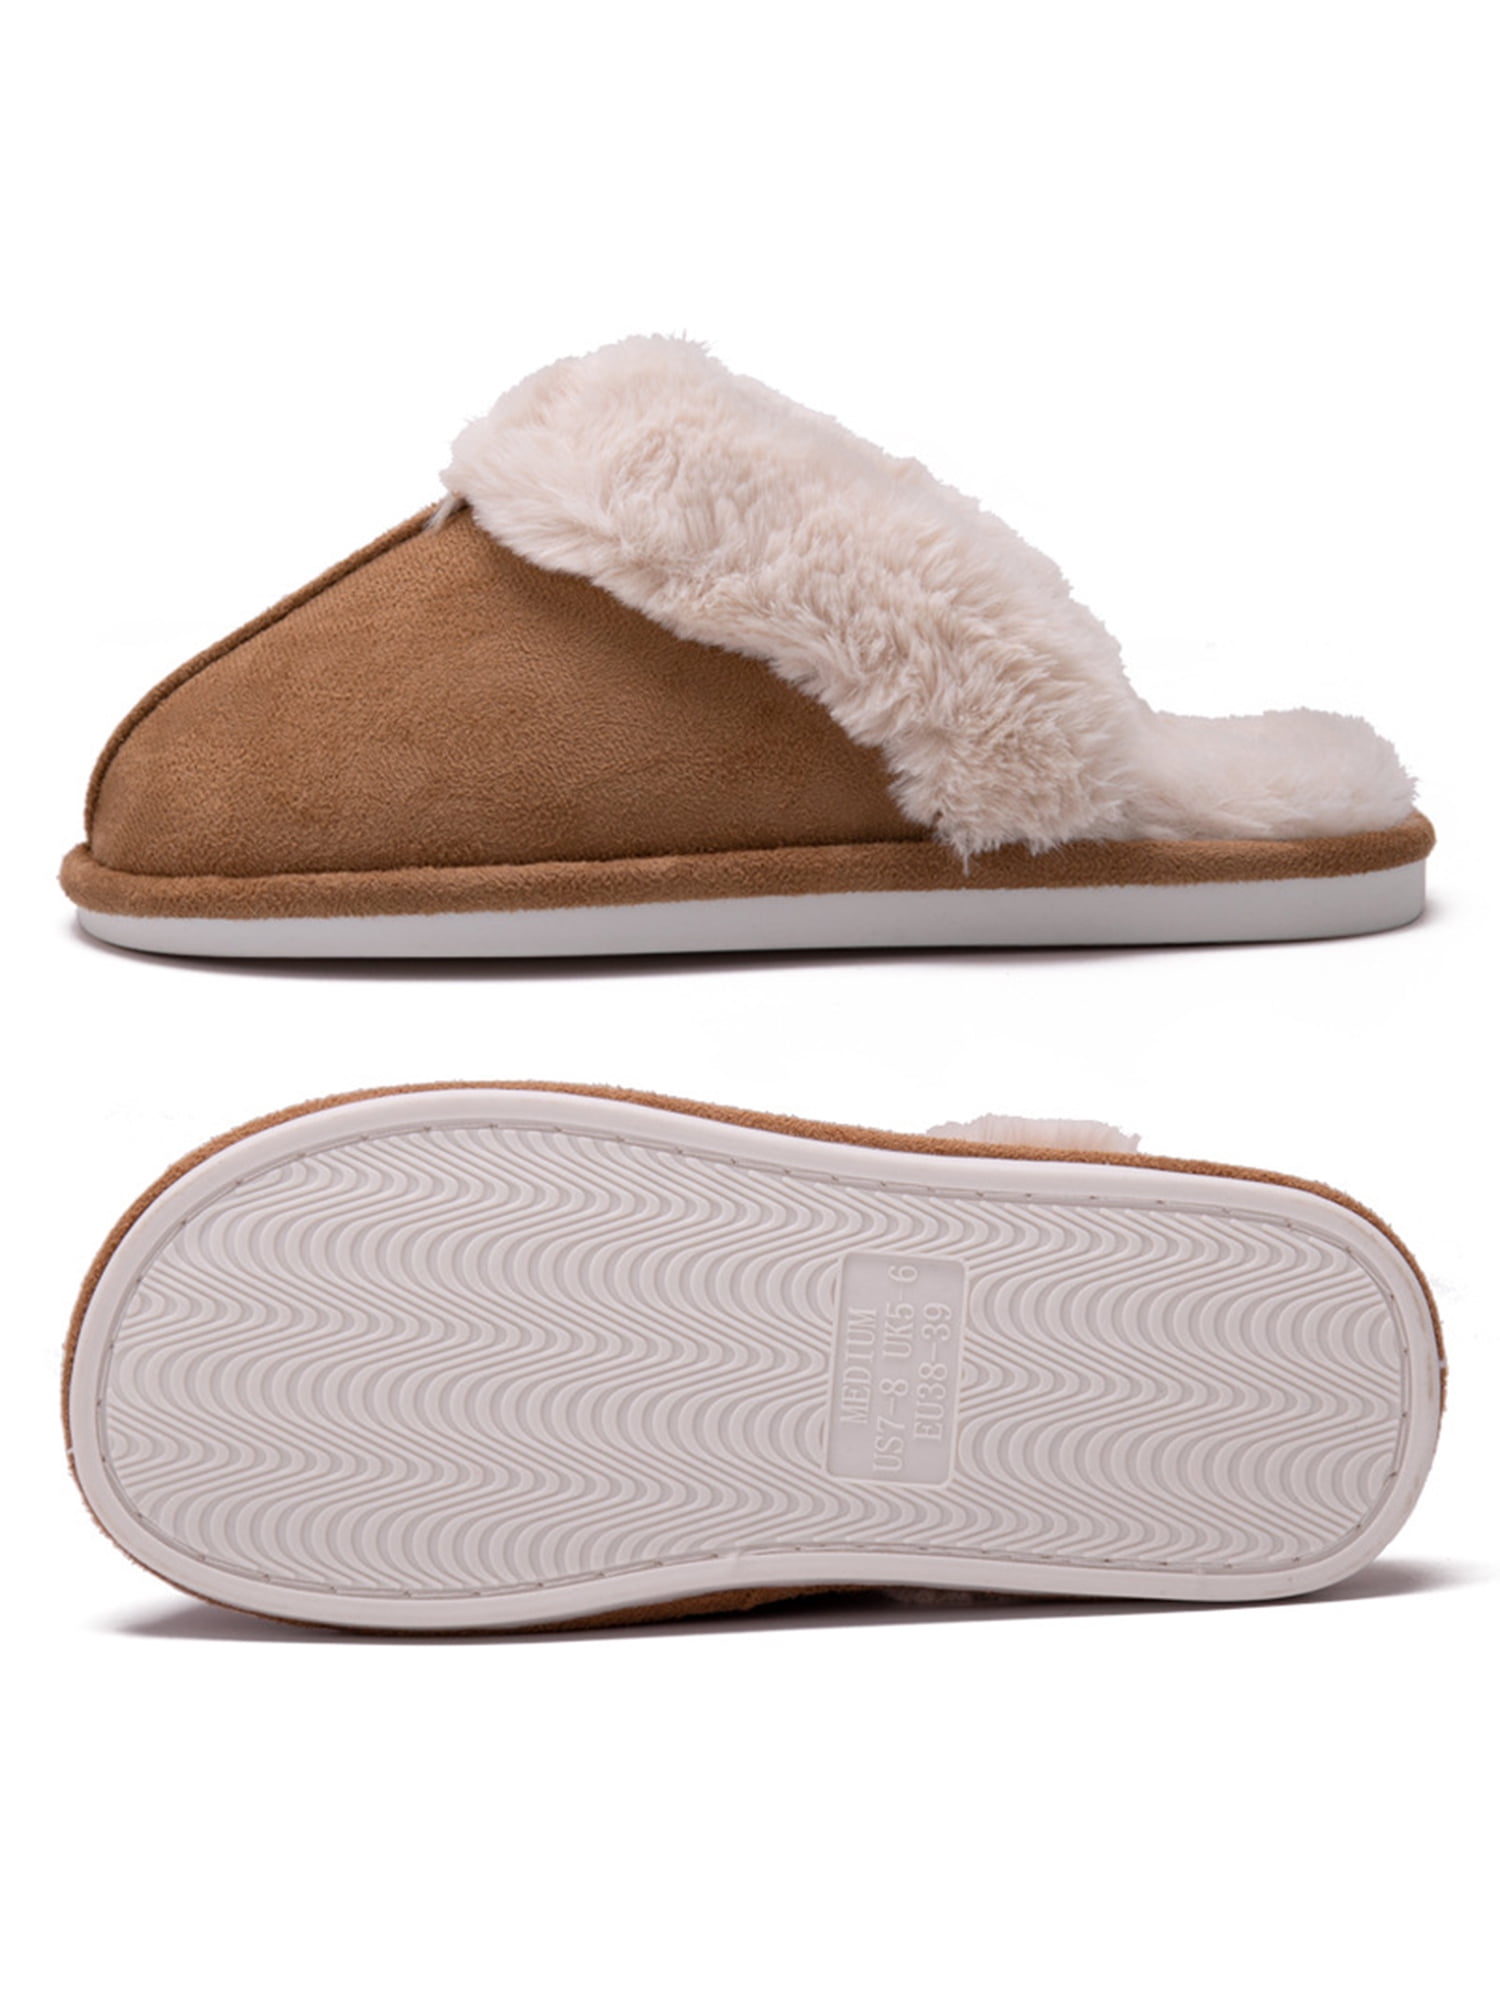 Sanviglor Unisex Clogs Slipper Fluffy Slippers Memory Warm Shoes Comfort Breathable Mules Slides Non-slip Soft Home Shoe Khaki 9.5-10 - Walmart.com